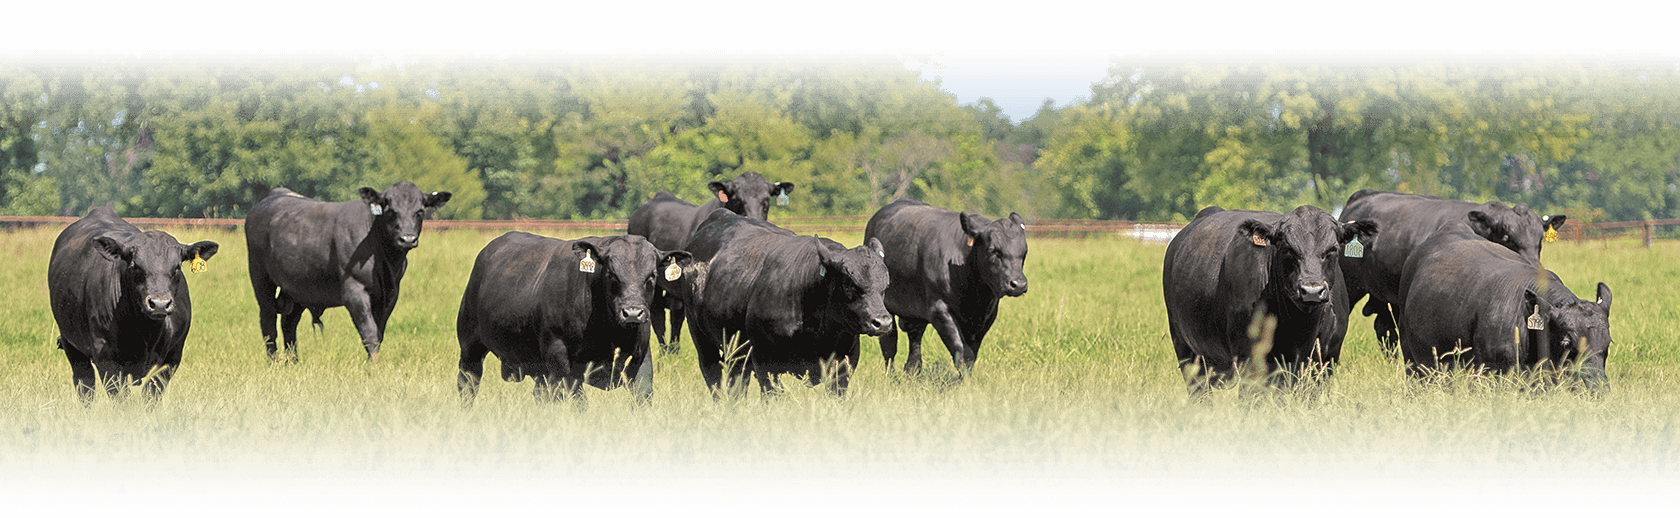 Bulls in a pasture